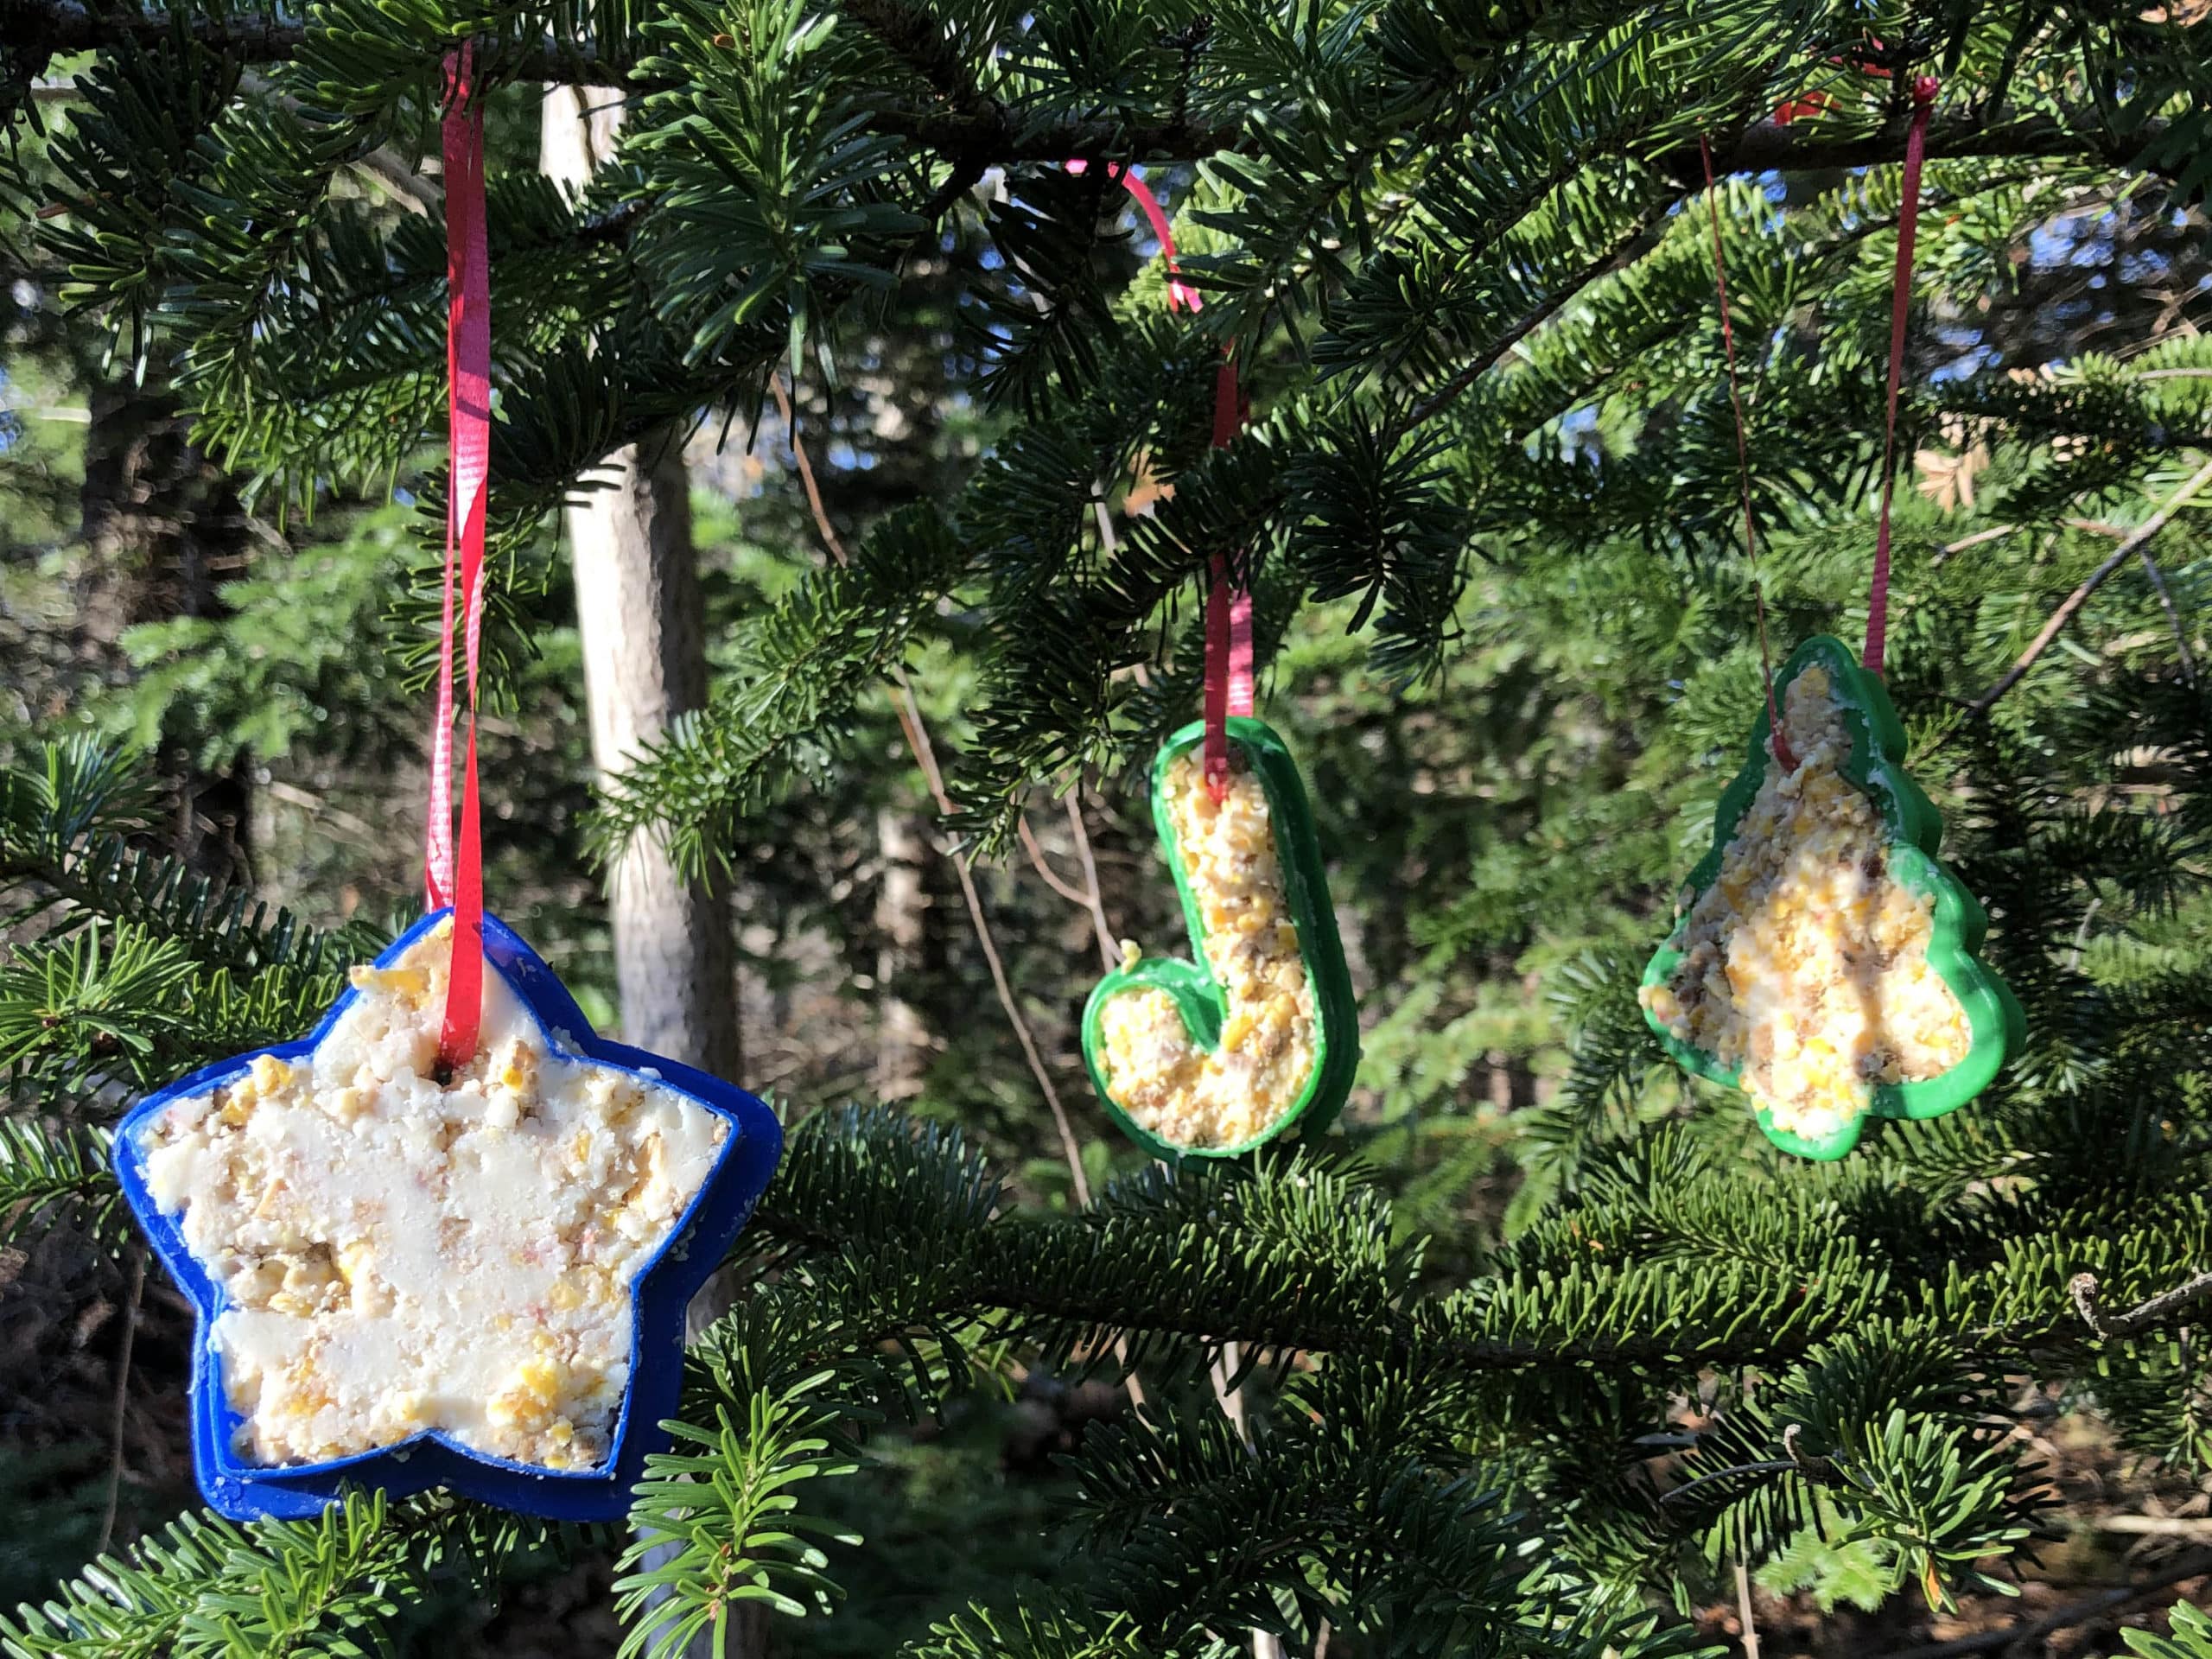 Wildlife friendly ornaments